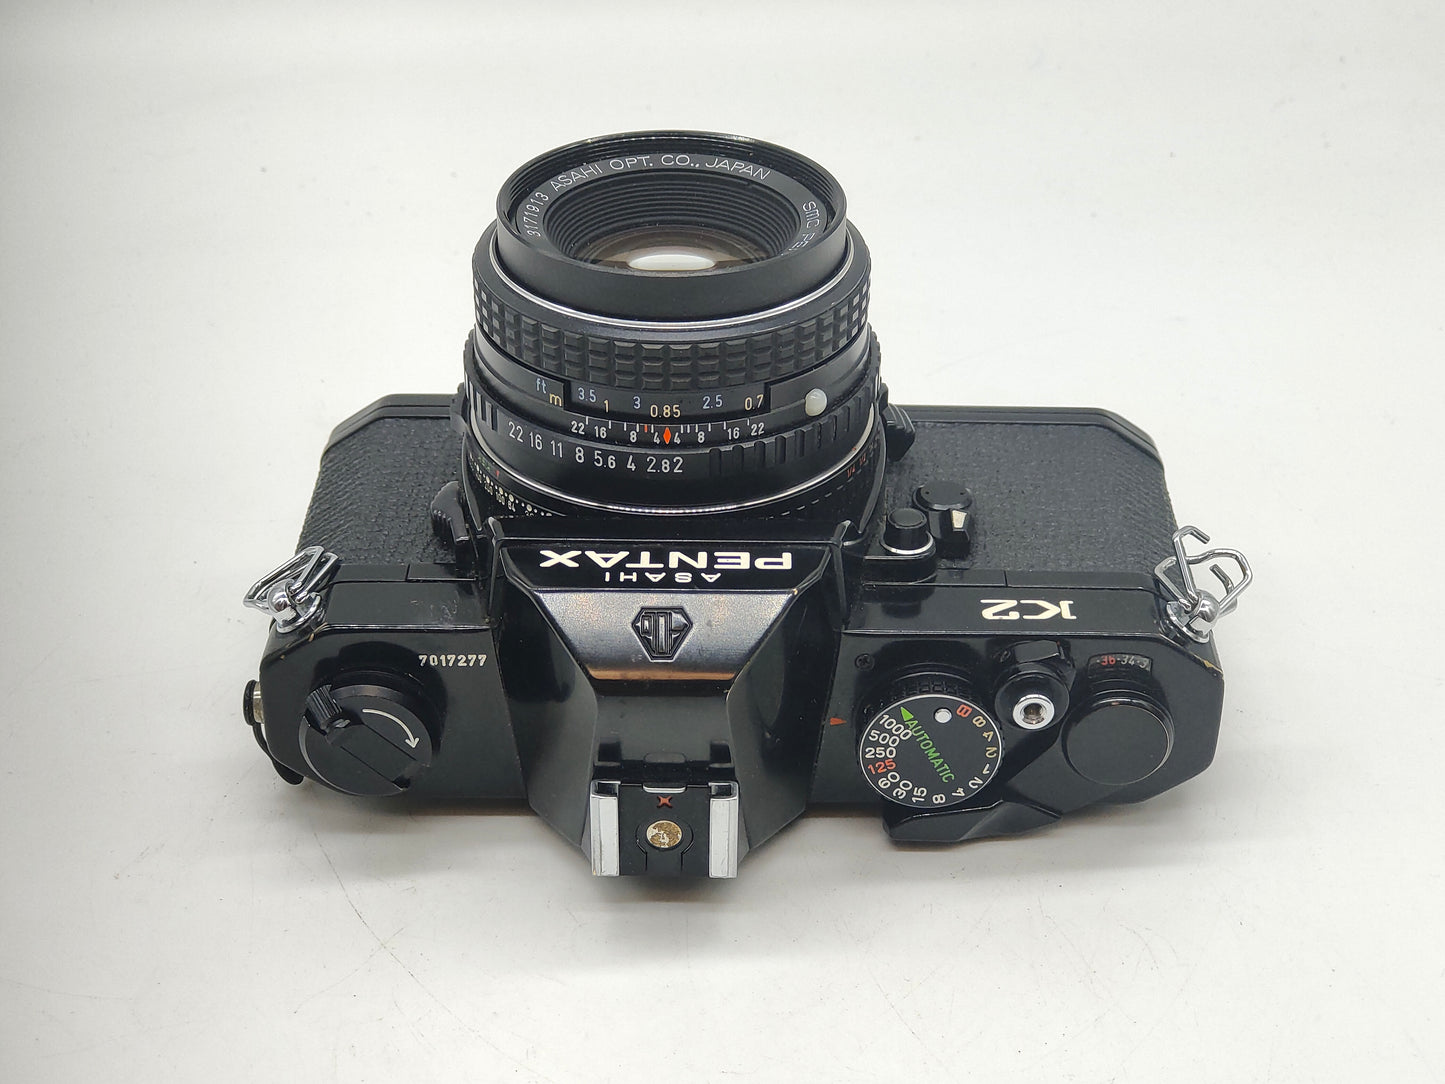 Pentax K2 SLR film camera with 50mm lens